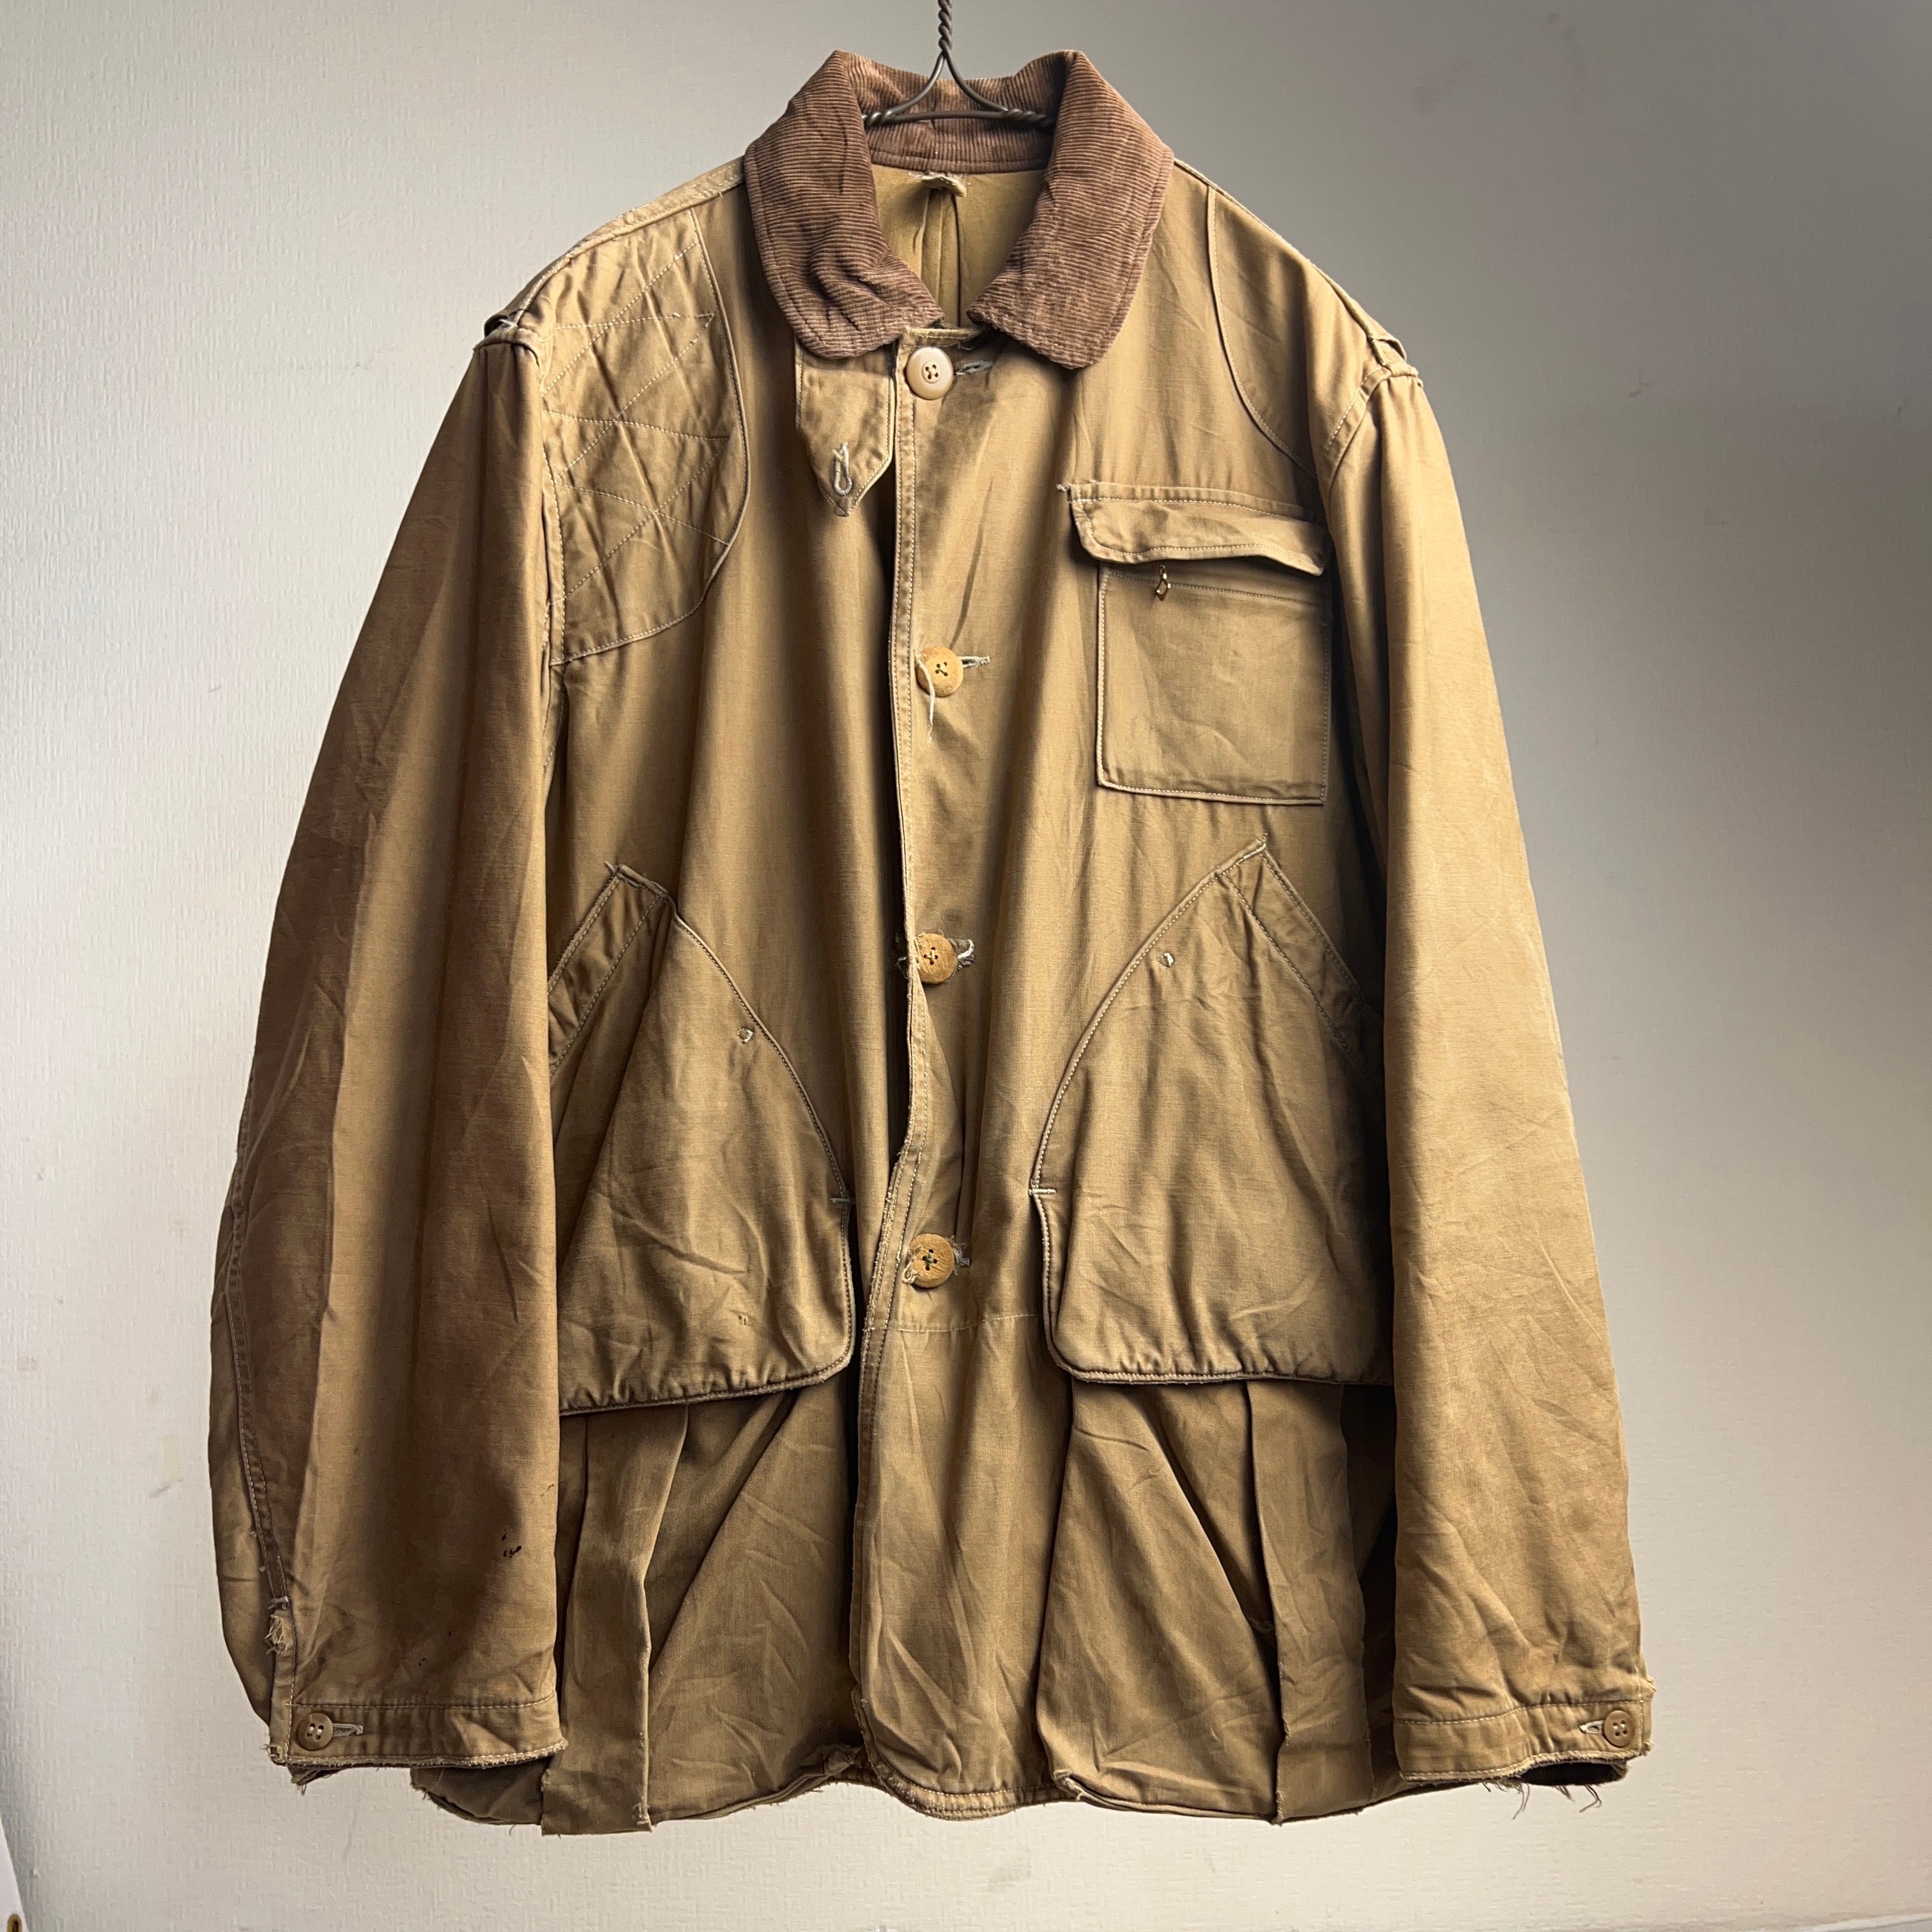 wells50-60s vintage jacket ヴィンテージ ジャケット